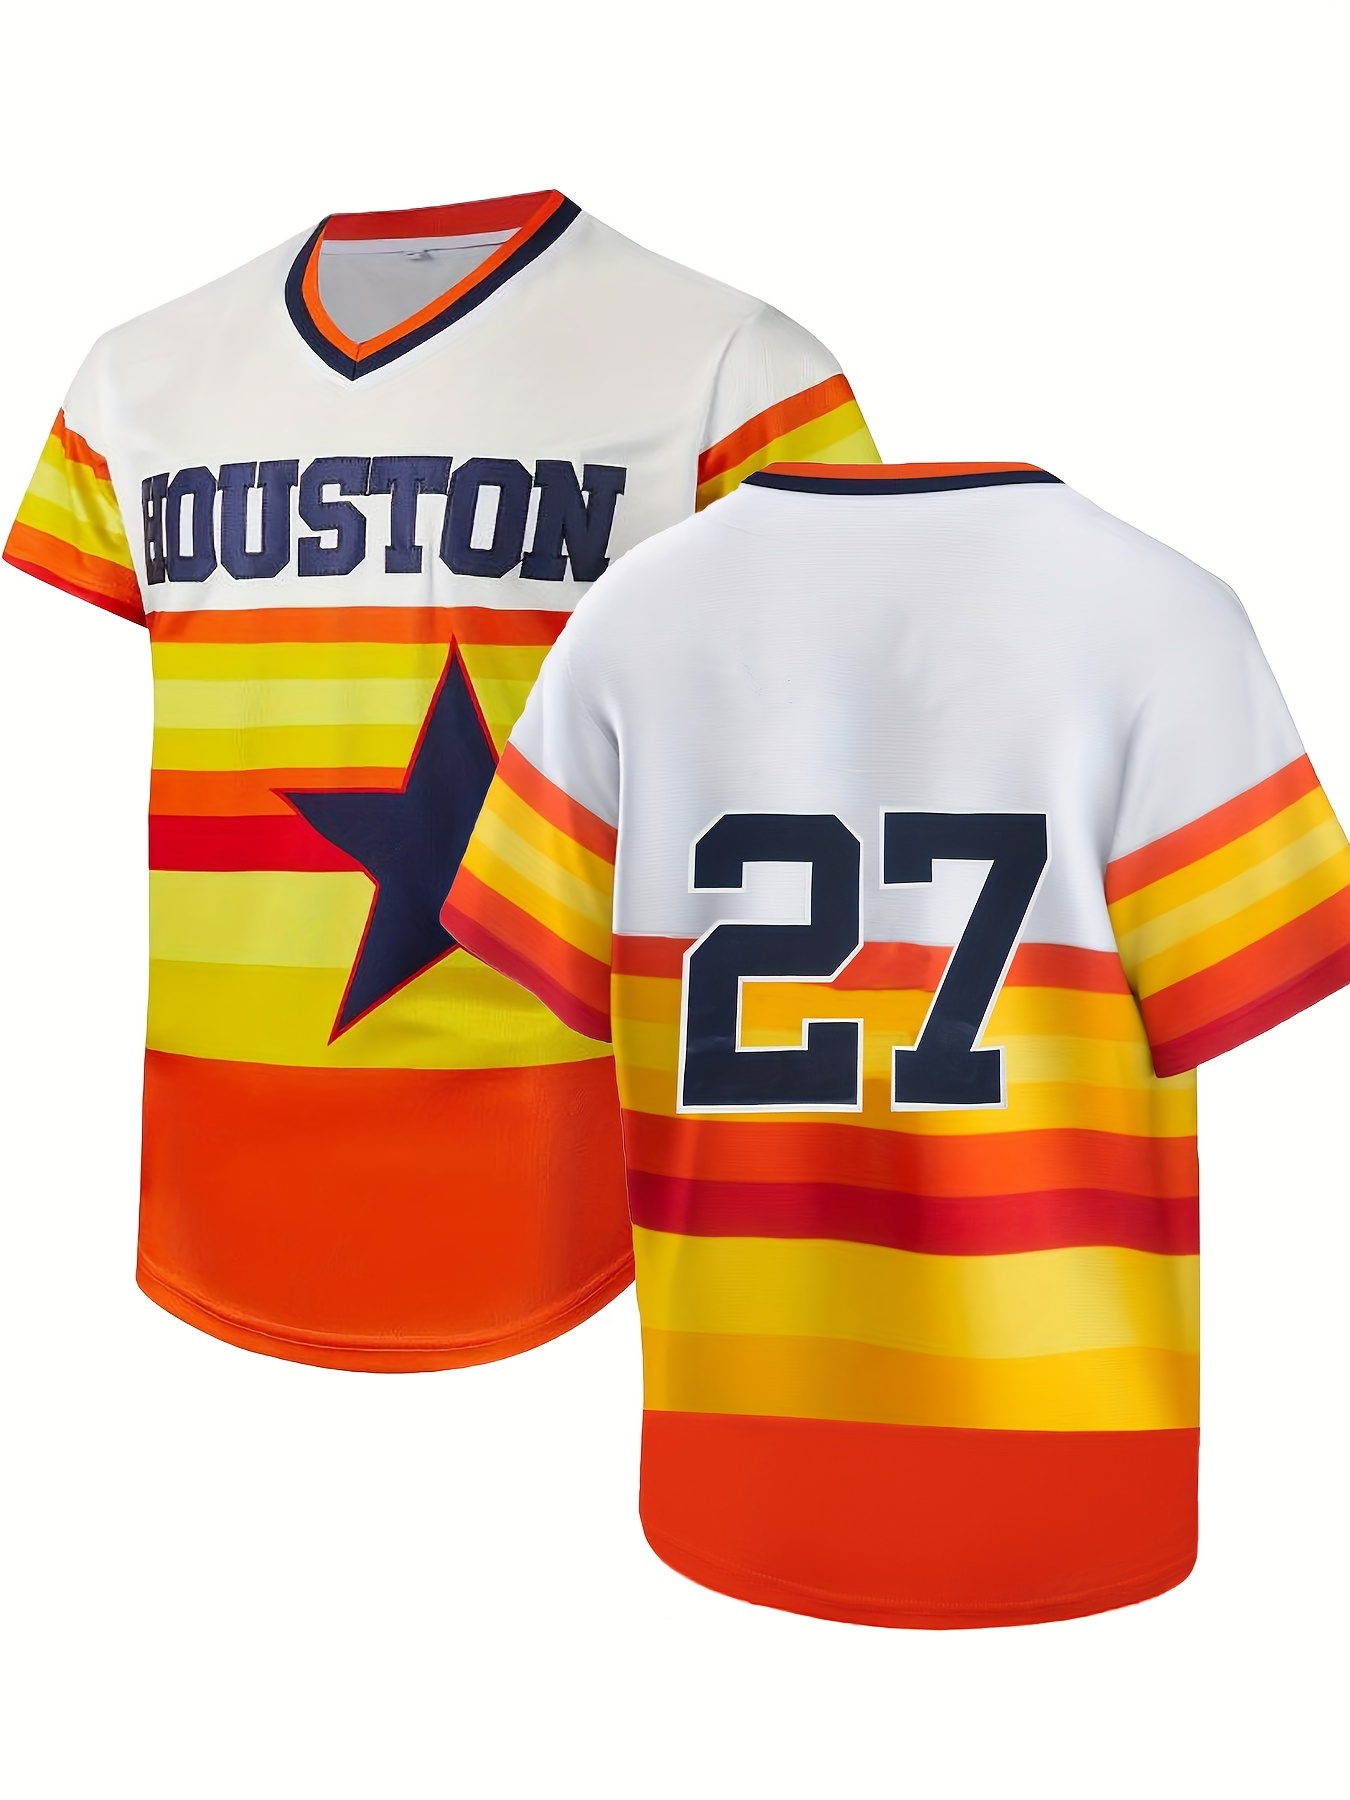 Men's San Diego #23 Baseball Jersey, Retro Classic Baseball Shirt